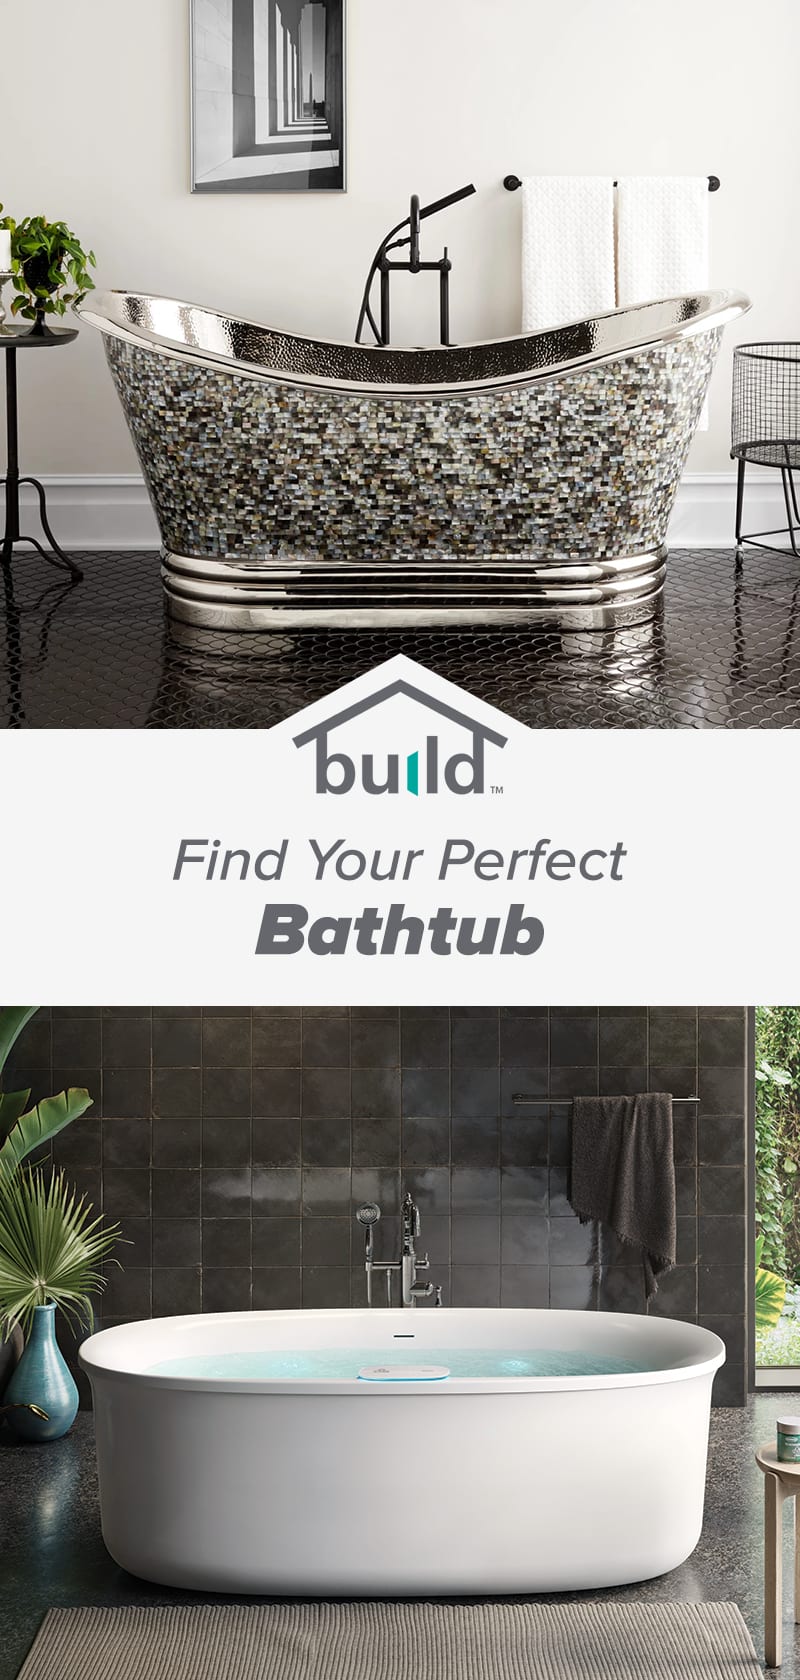 Types Of Bathtubs